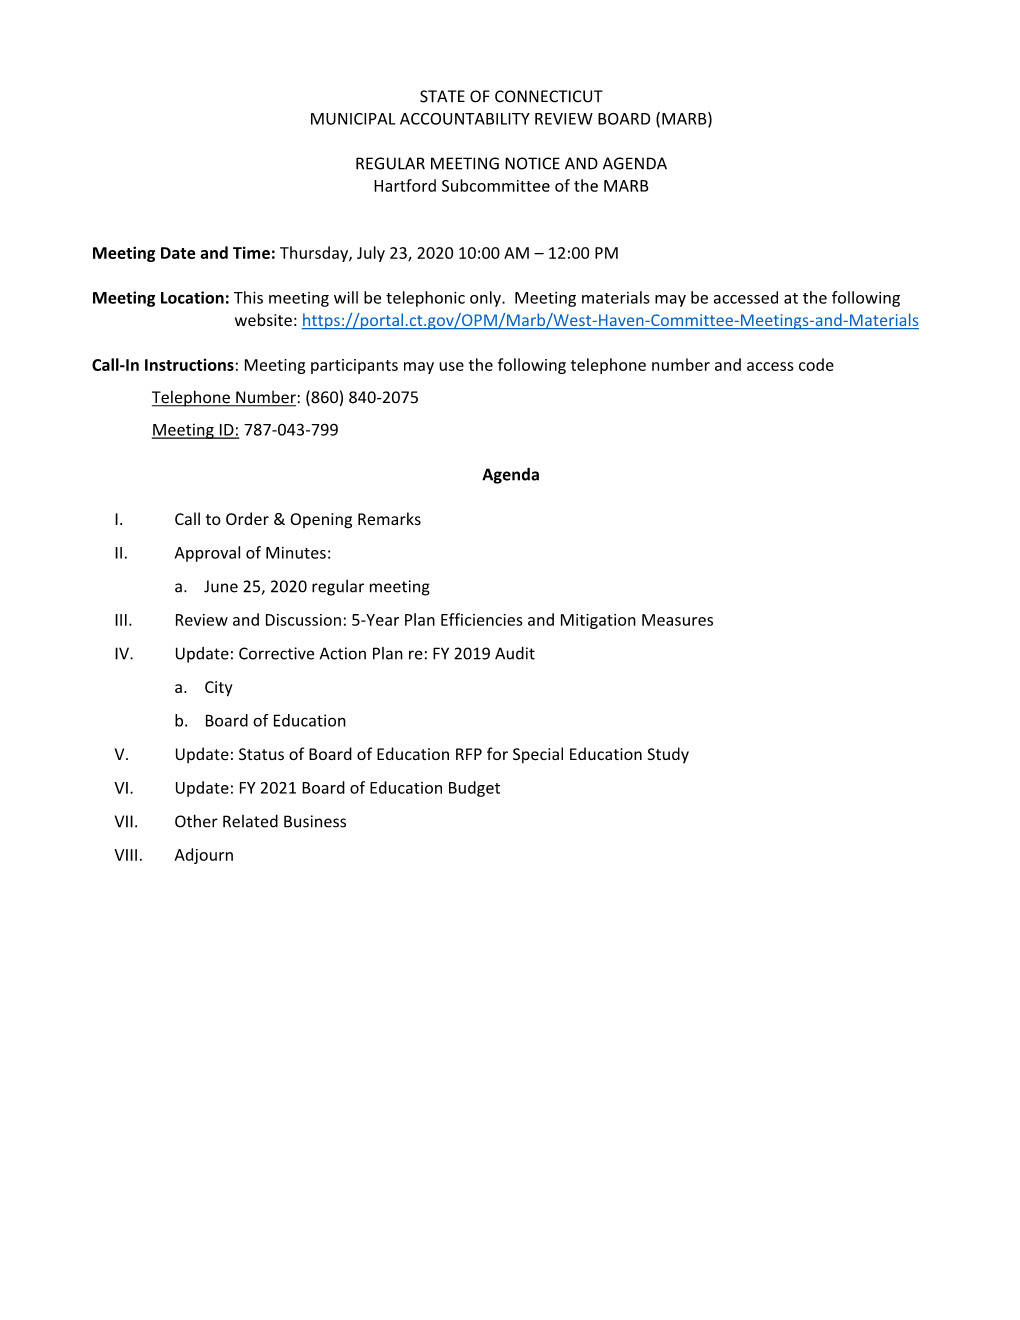 (Marb) Regular Meeting Notice and Agenda